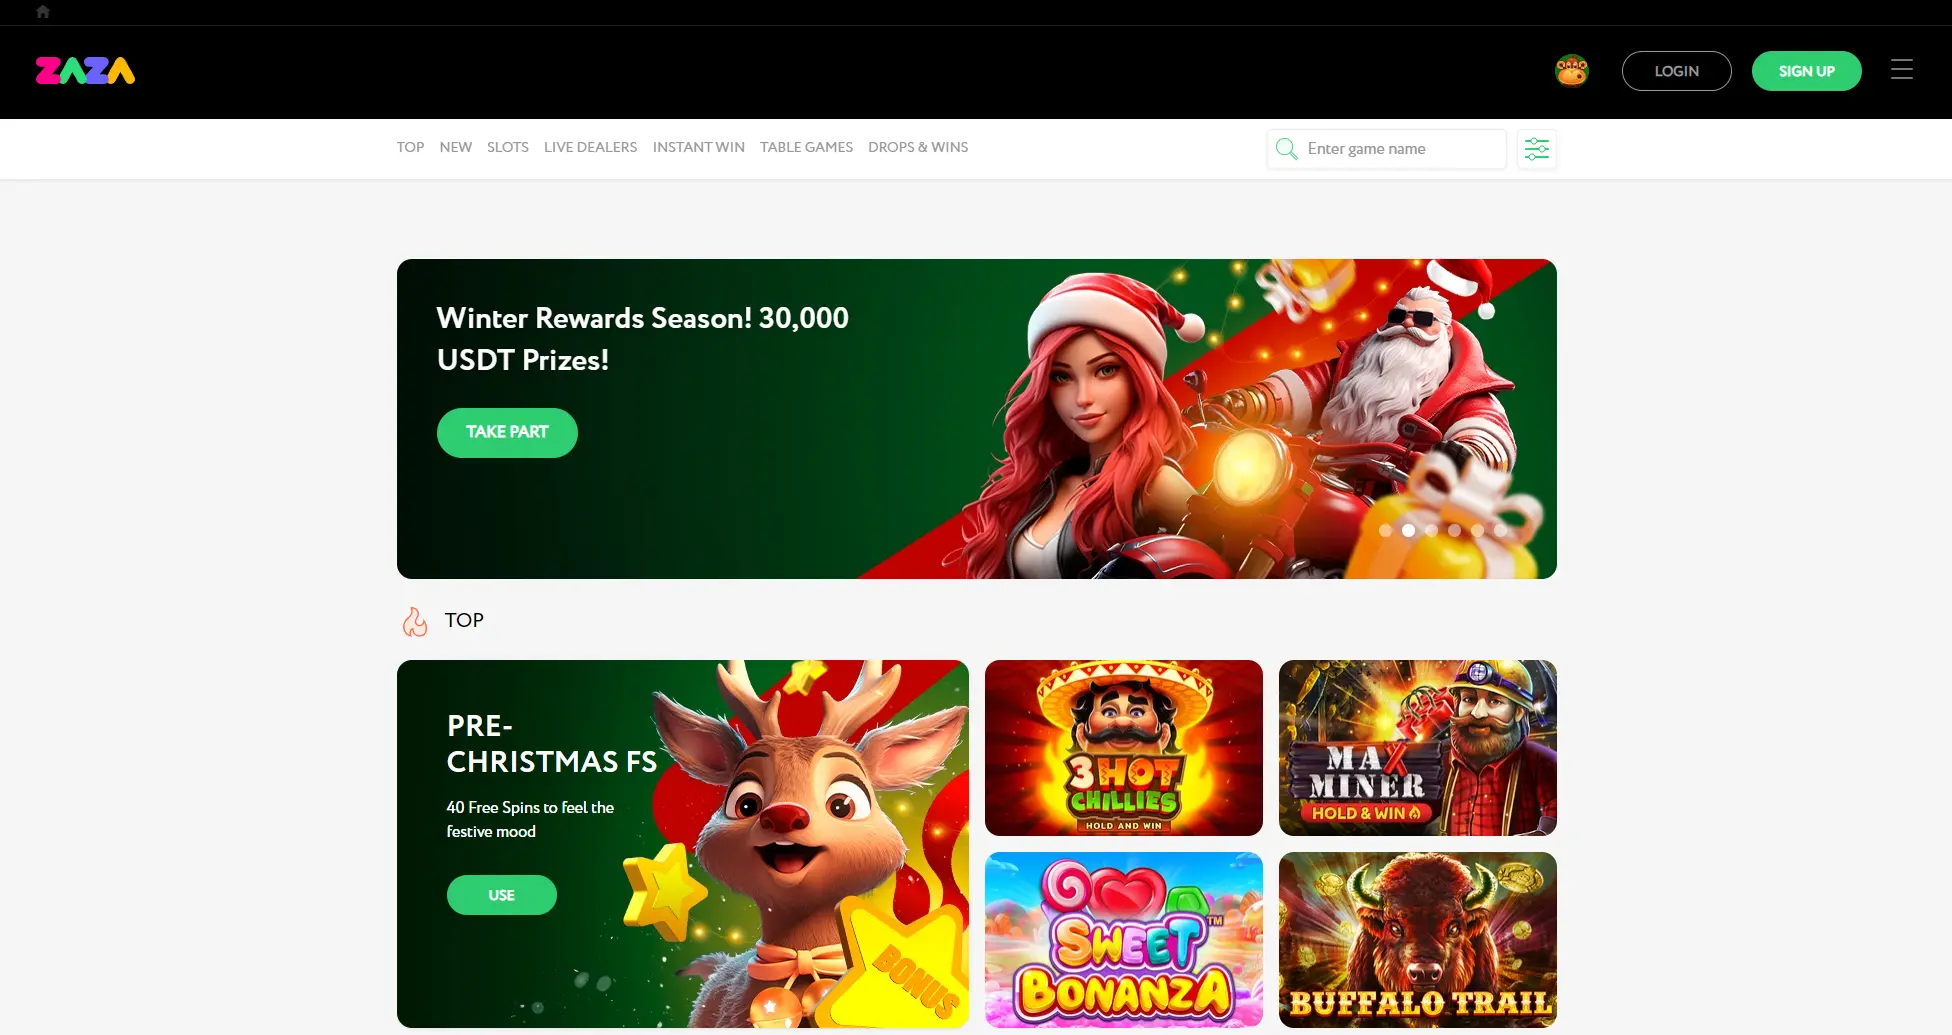 Zaza Casino is a sought-after gambling website among users worldwide